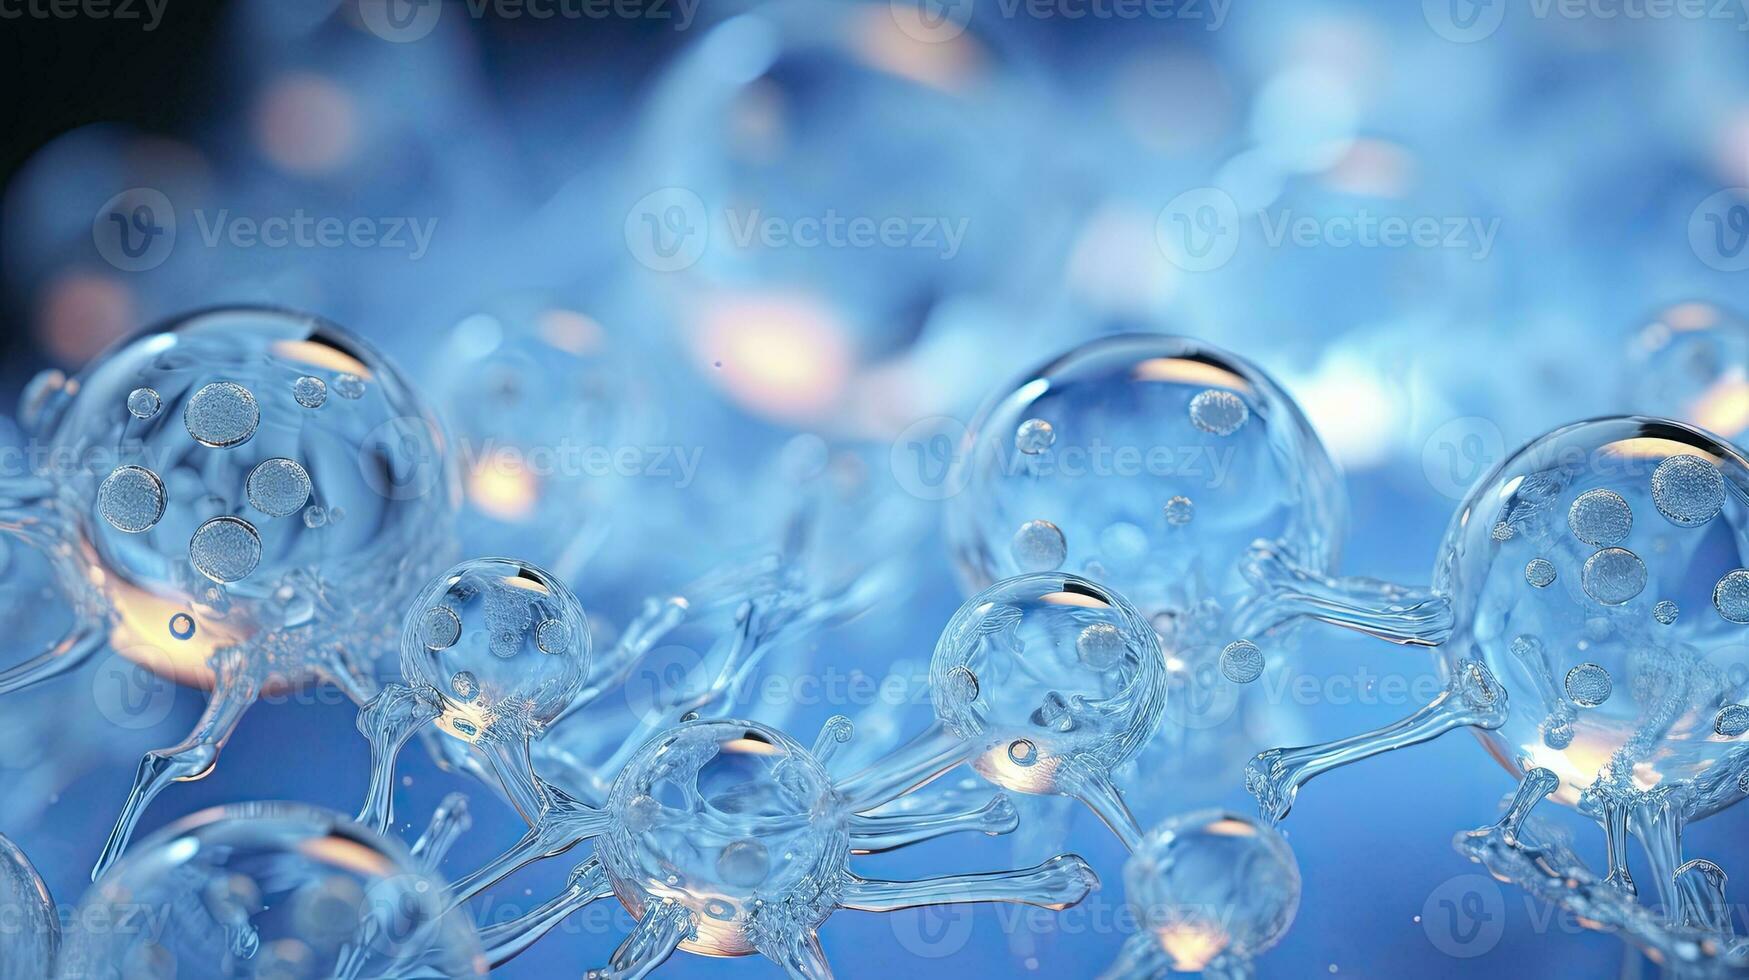 Molecular structure blue cells background fresh style, Generative AI photo